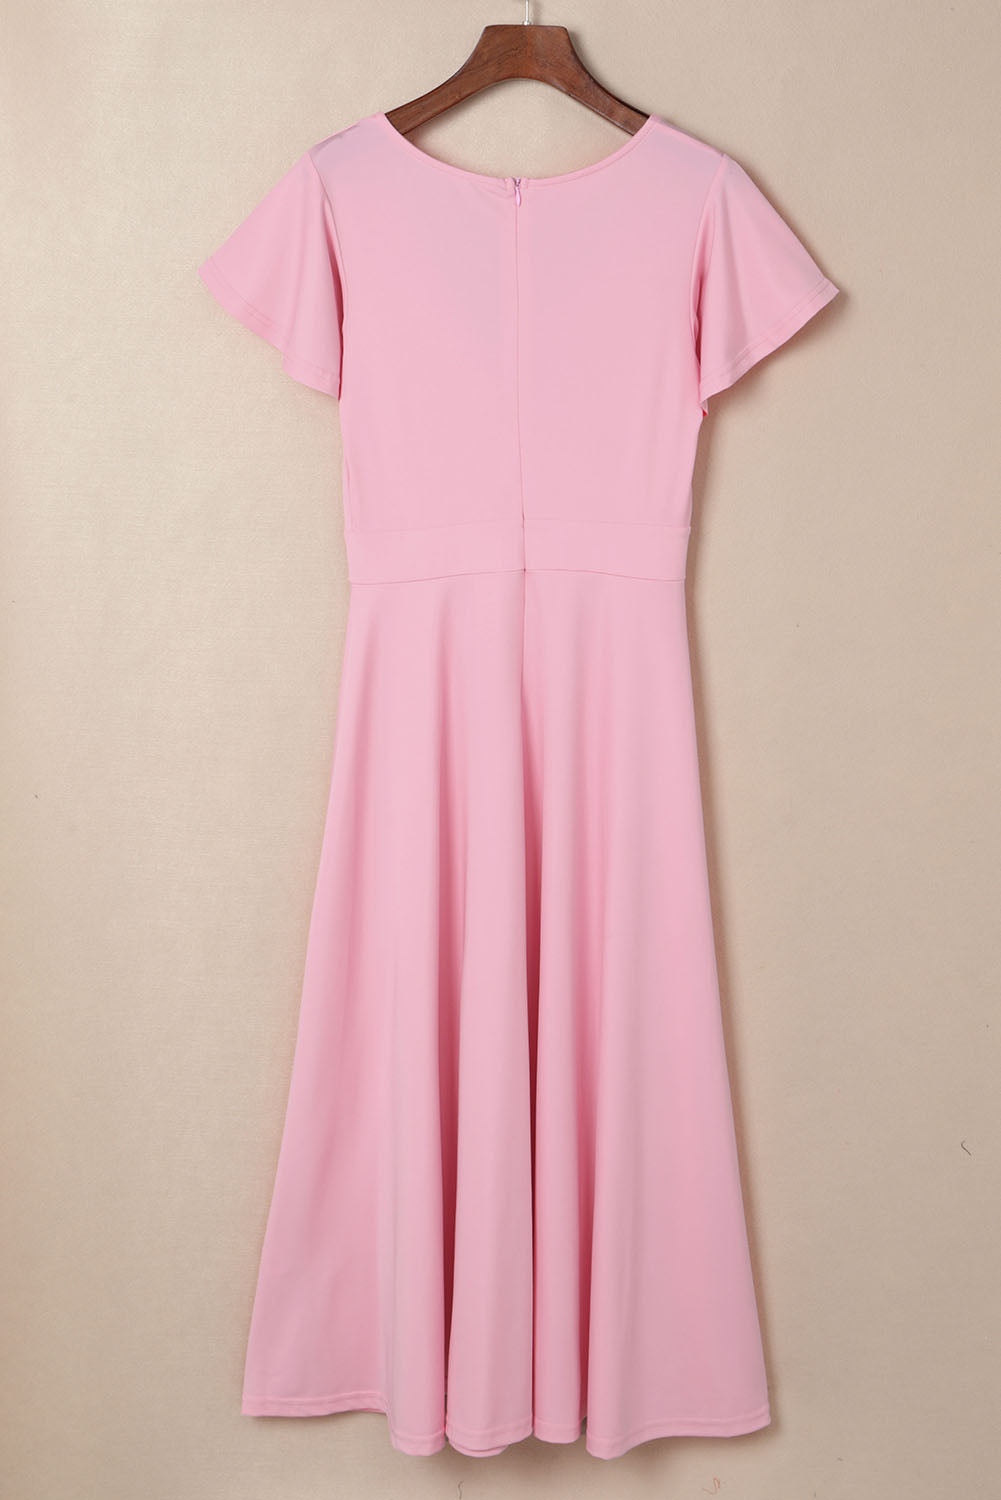 LC6110363-10-S, LC6110363-10-M, LC6110363-10-L, LC6110363-10-XL, LC6110363-10-2XL, Pink Womens V Neck Ruffle Sleeve Wrap Dress Midi Dress Cocktail Party Dress